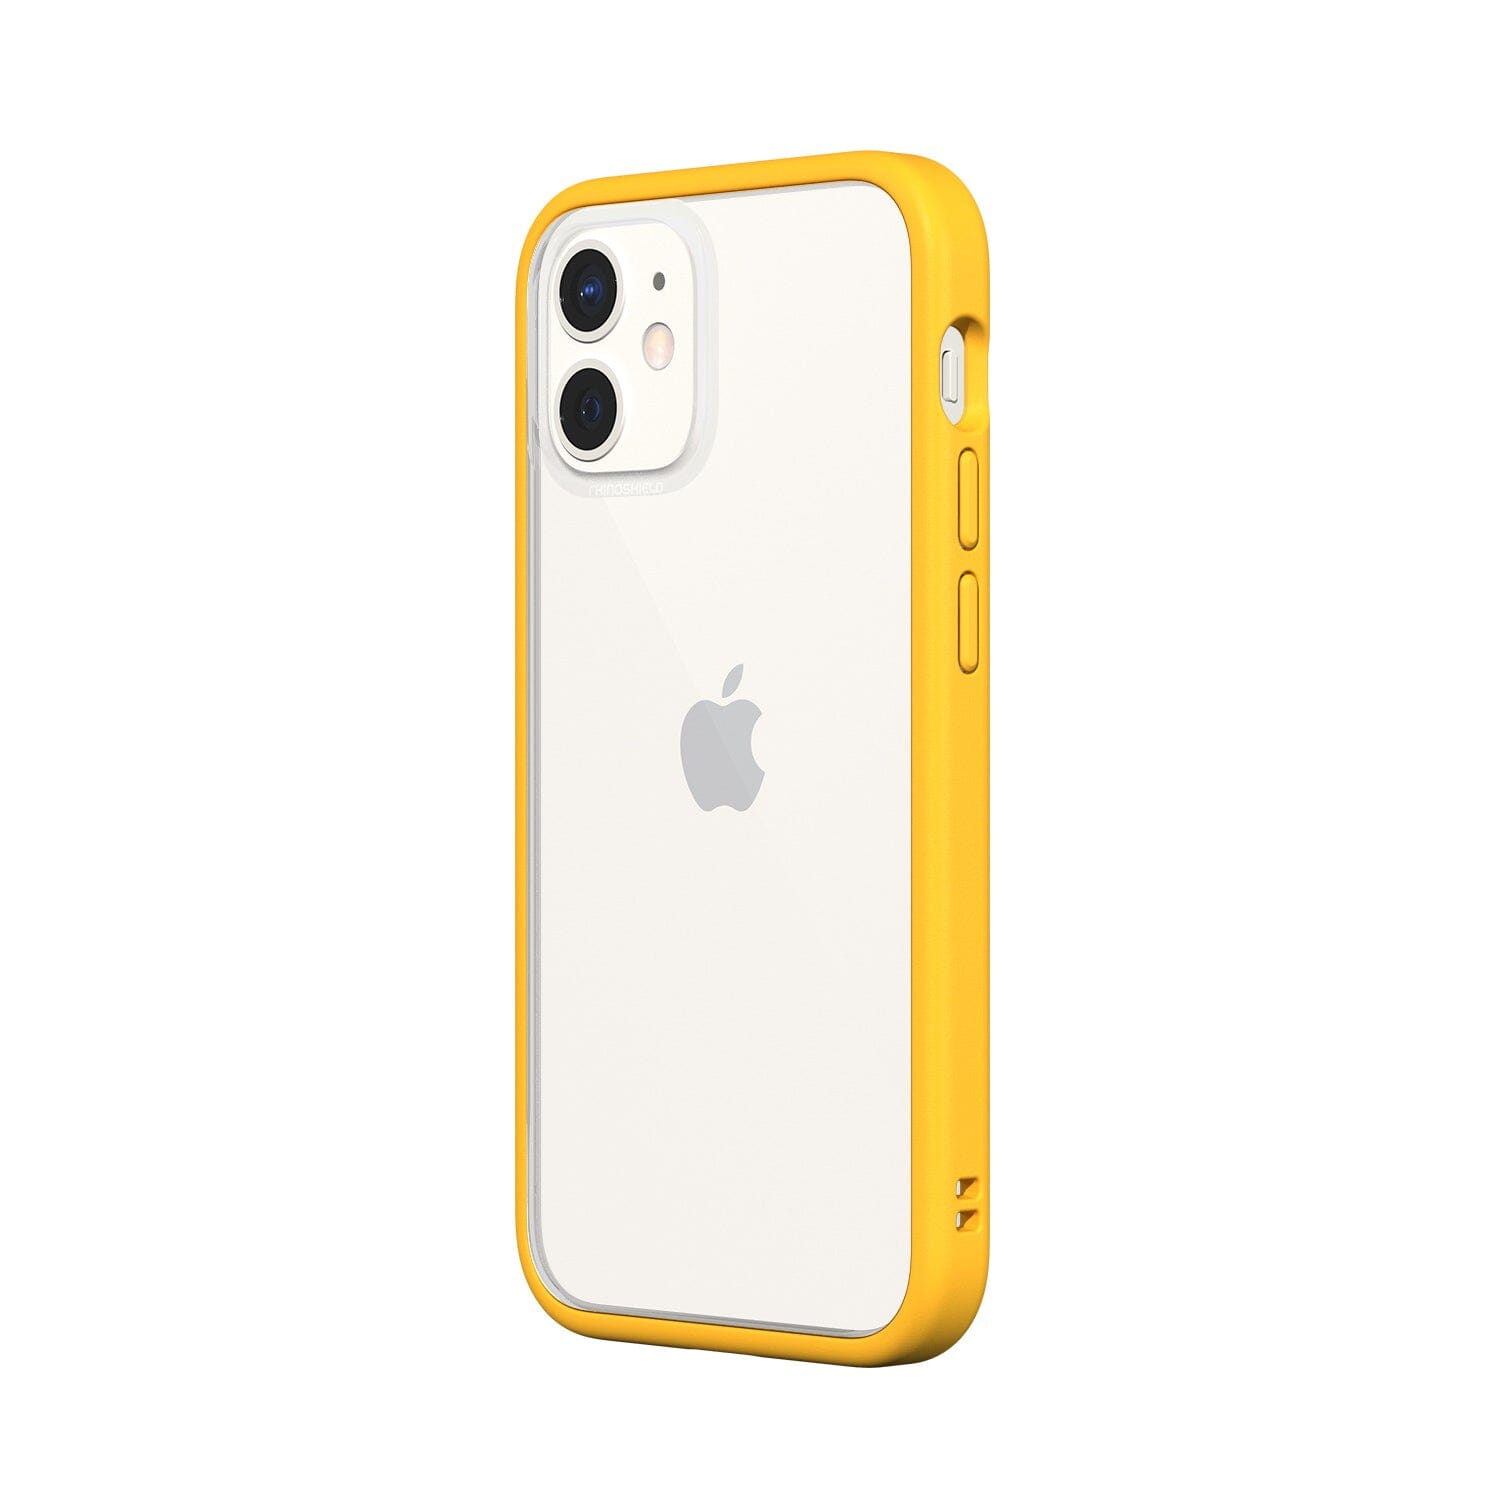 RhinoShield Mod NX Modular Case for iPhone 12 Series (2020) iPhone 12 Series RhinoShield iPhone 12 mini 5.4" Yellow 